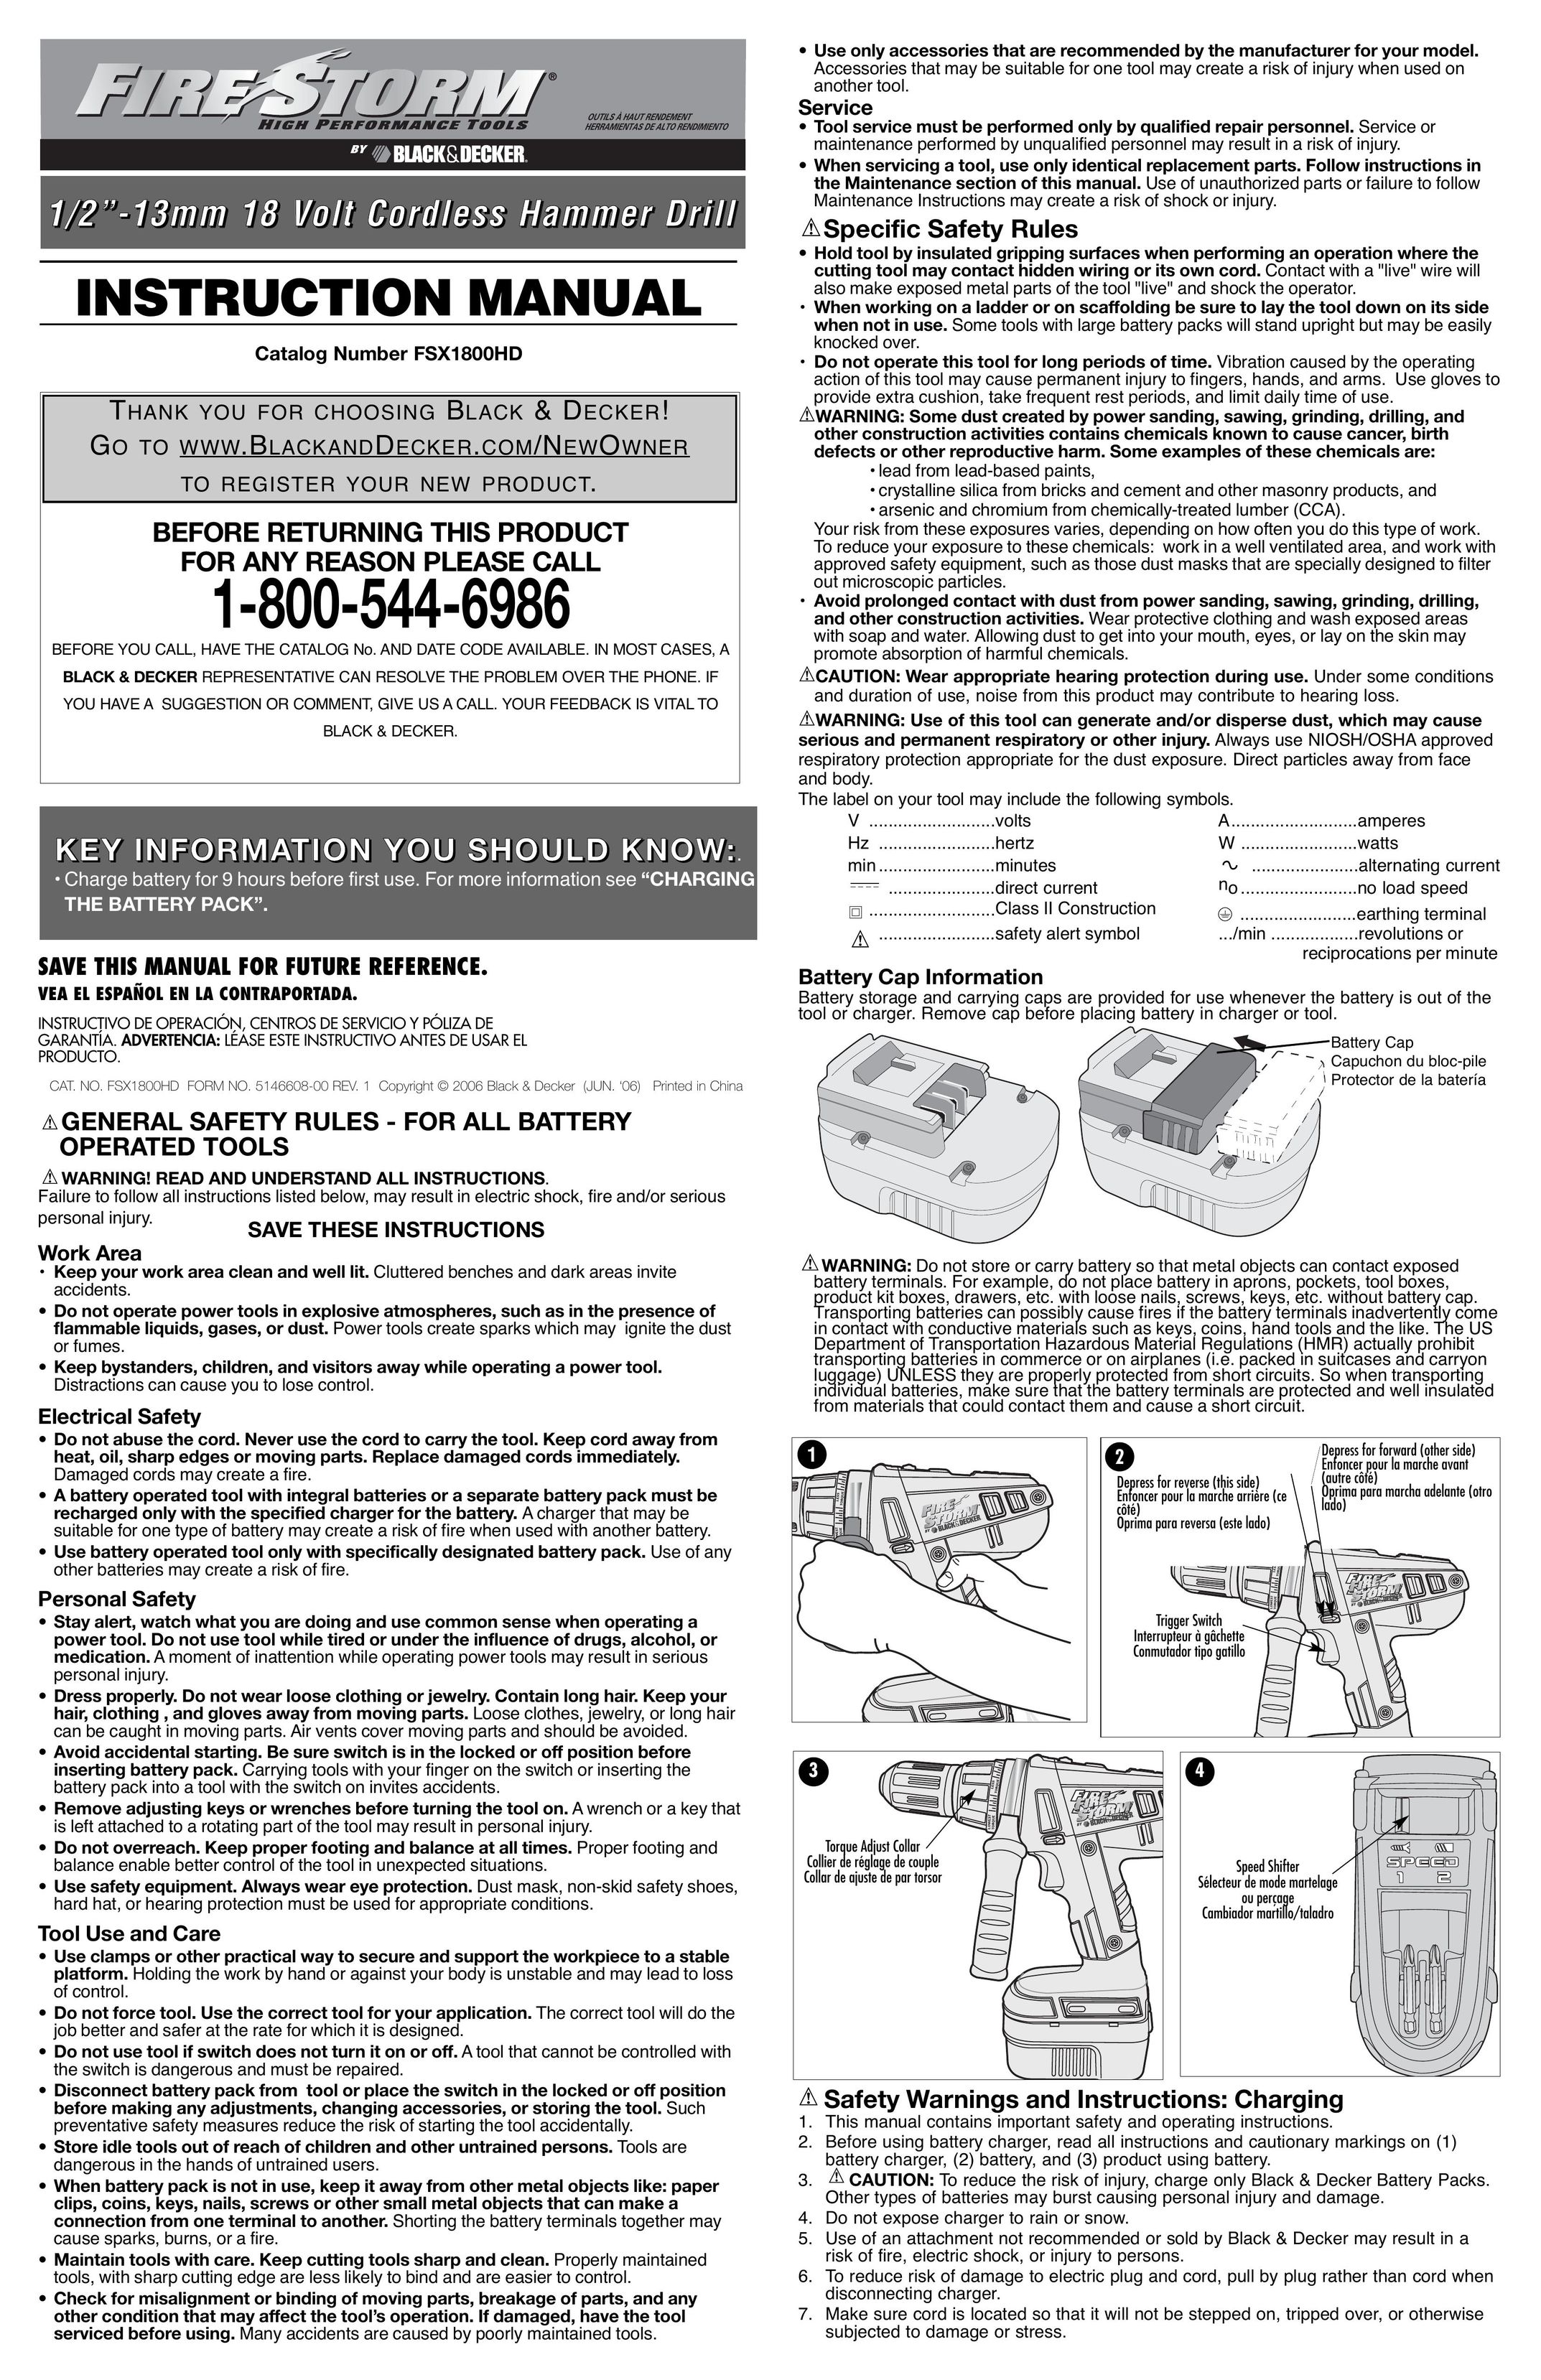 Black & Decker 5146608-00 Cordless Drill User Manual